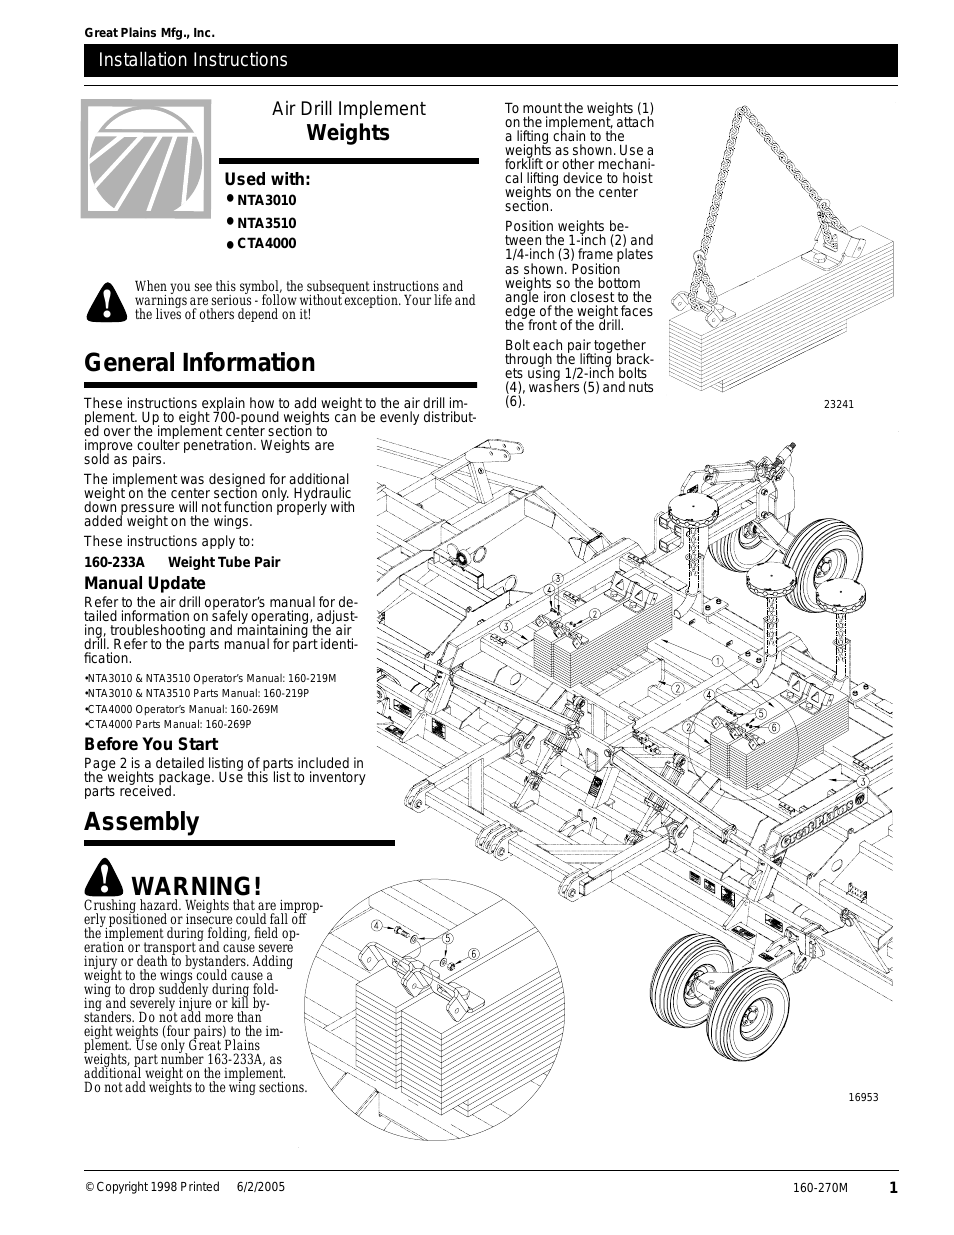 NTA3010 Assembly Instructions